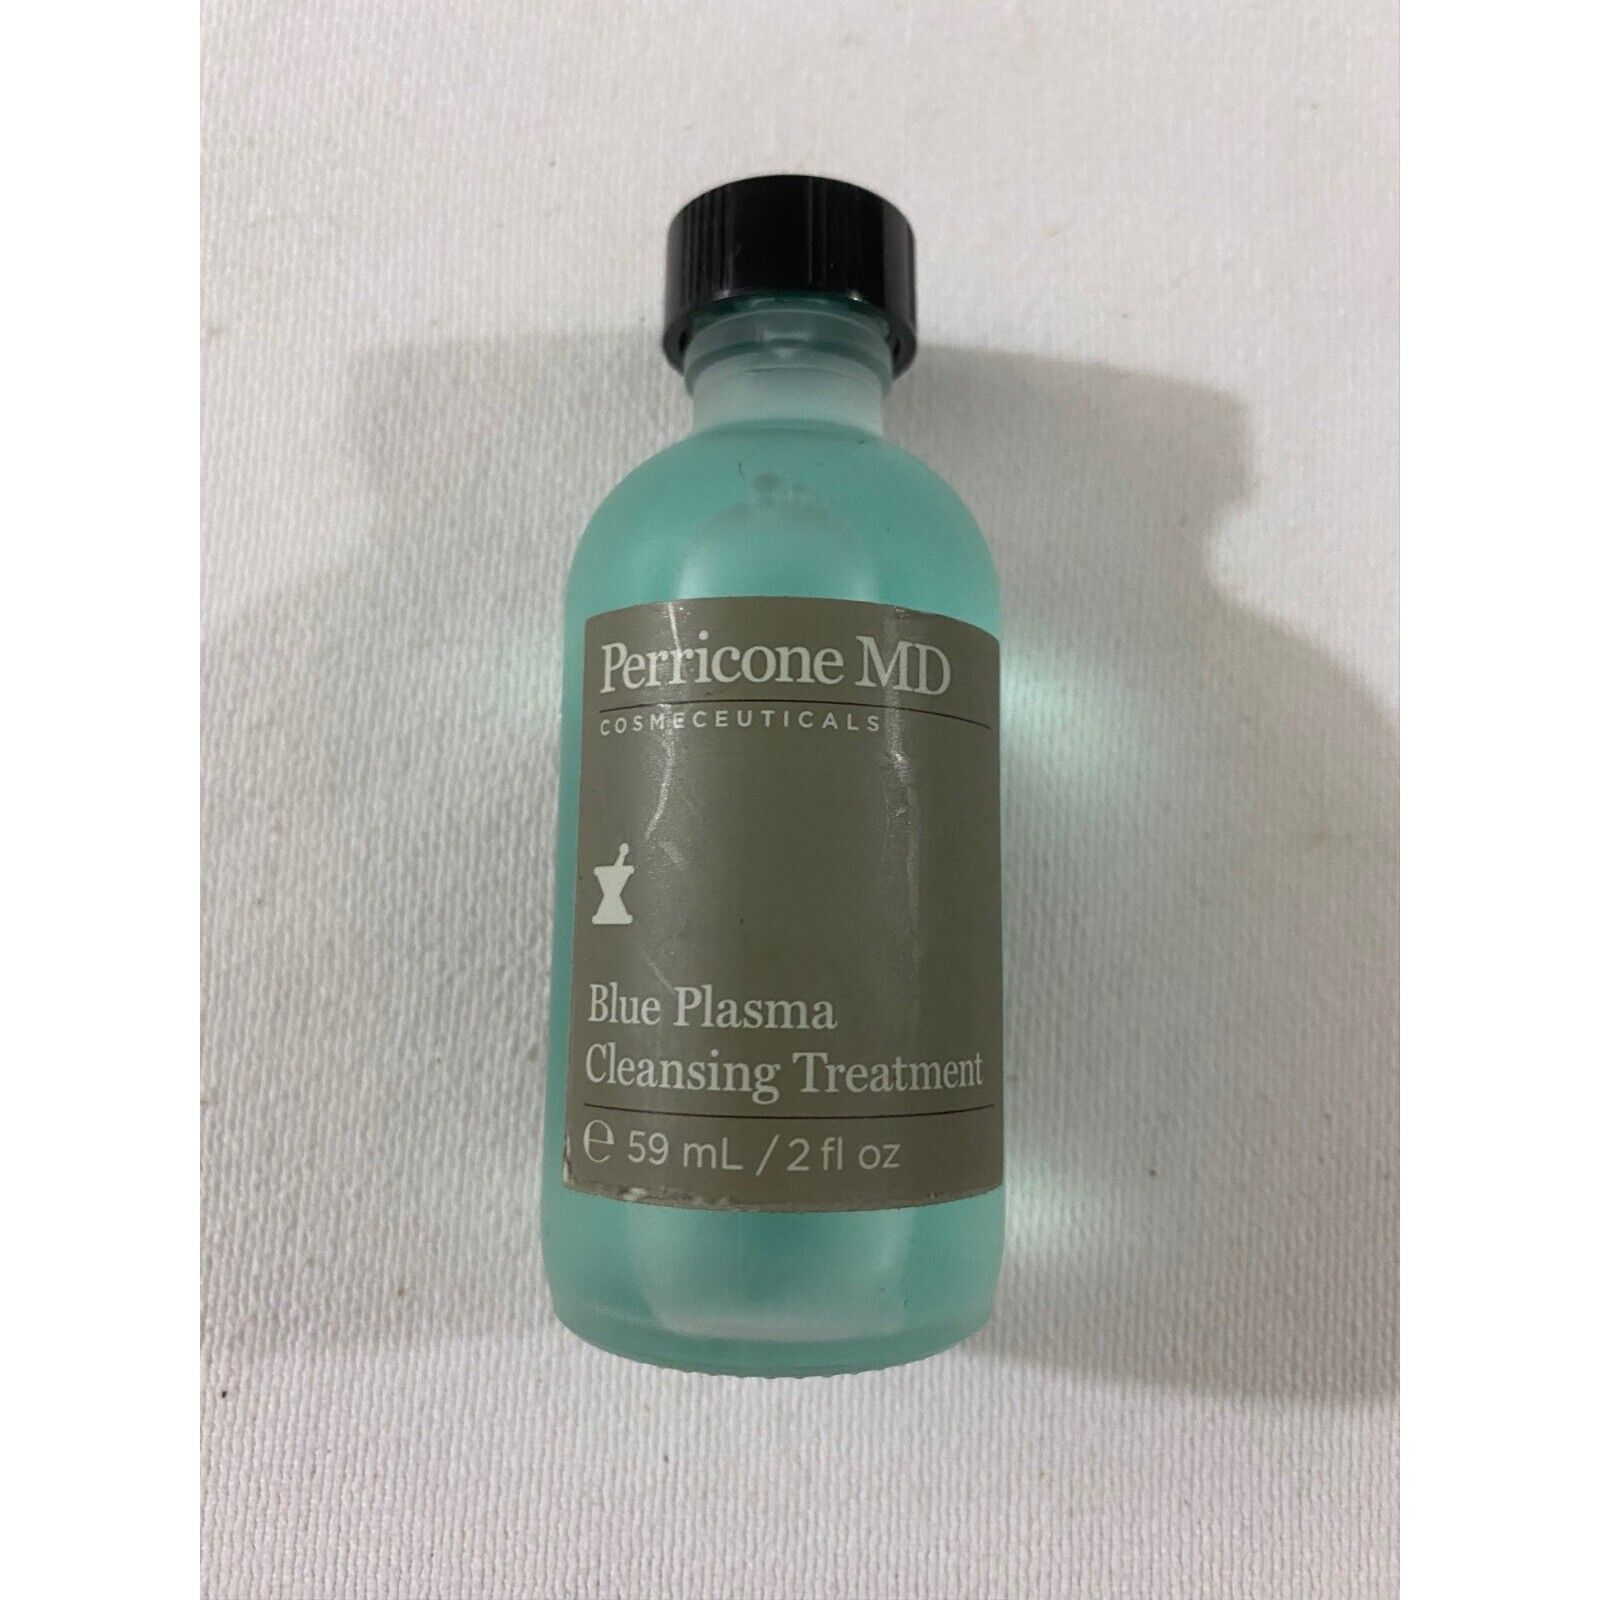 Perricone MD Blue Plasma Cleansing Treatment 2 oz - $15.84